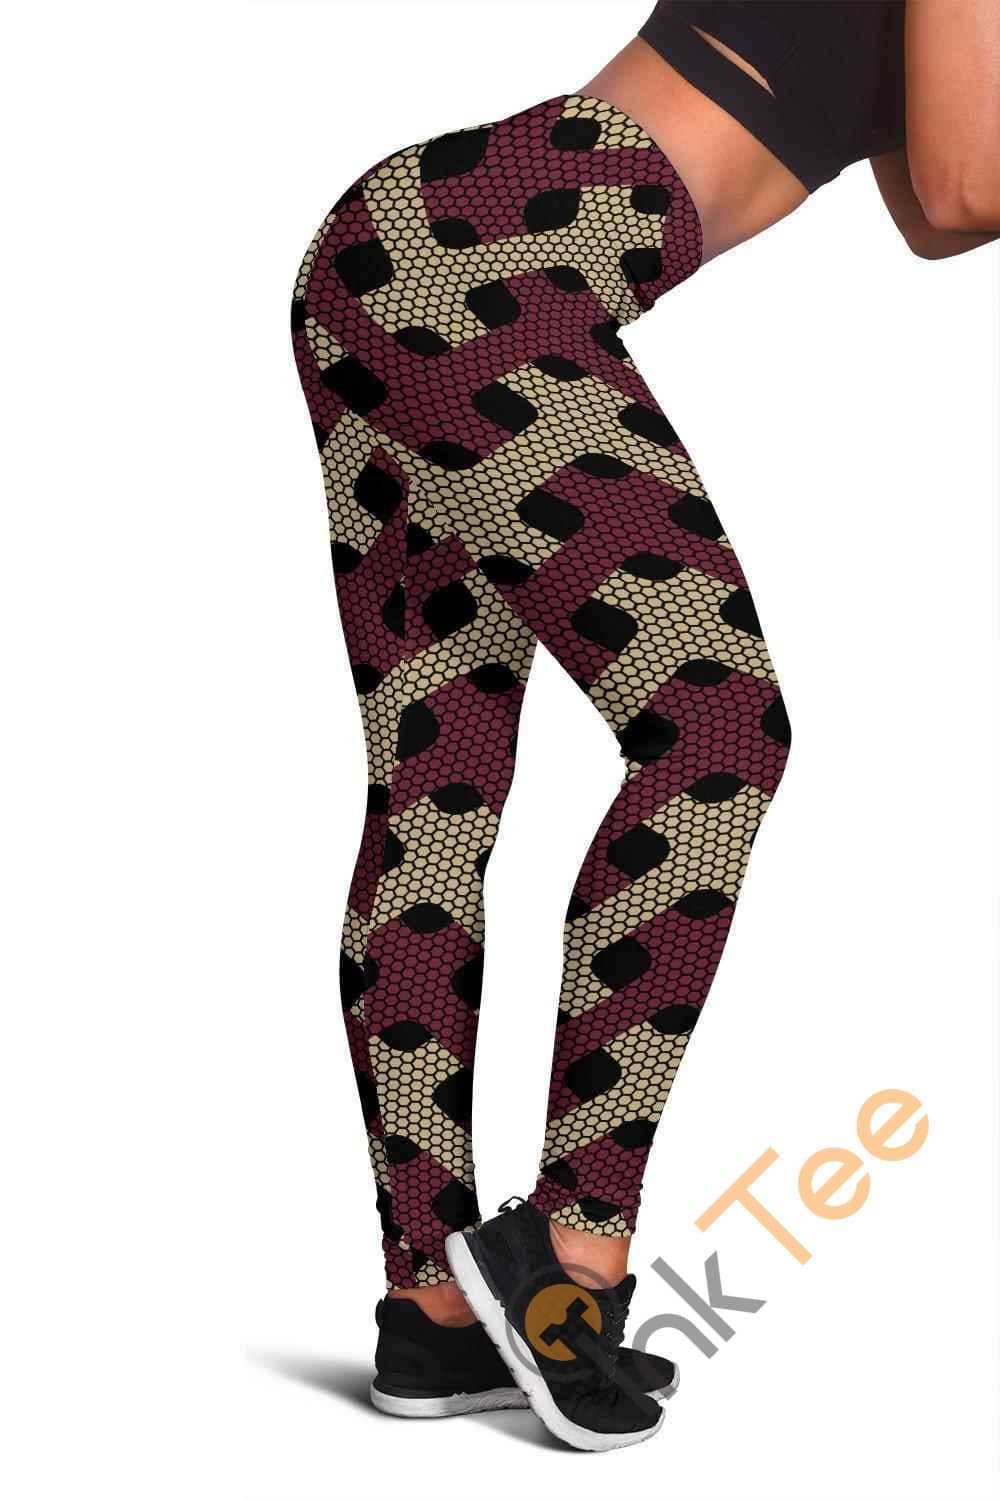 Inktee Store - Florida State Seminoles Inspired Liberty Garnett 3D All Over Print For Yoga Fitness Fashion Women'S Leggings Image